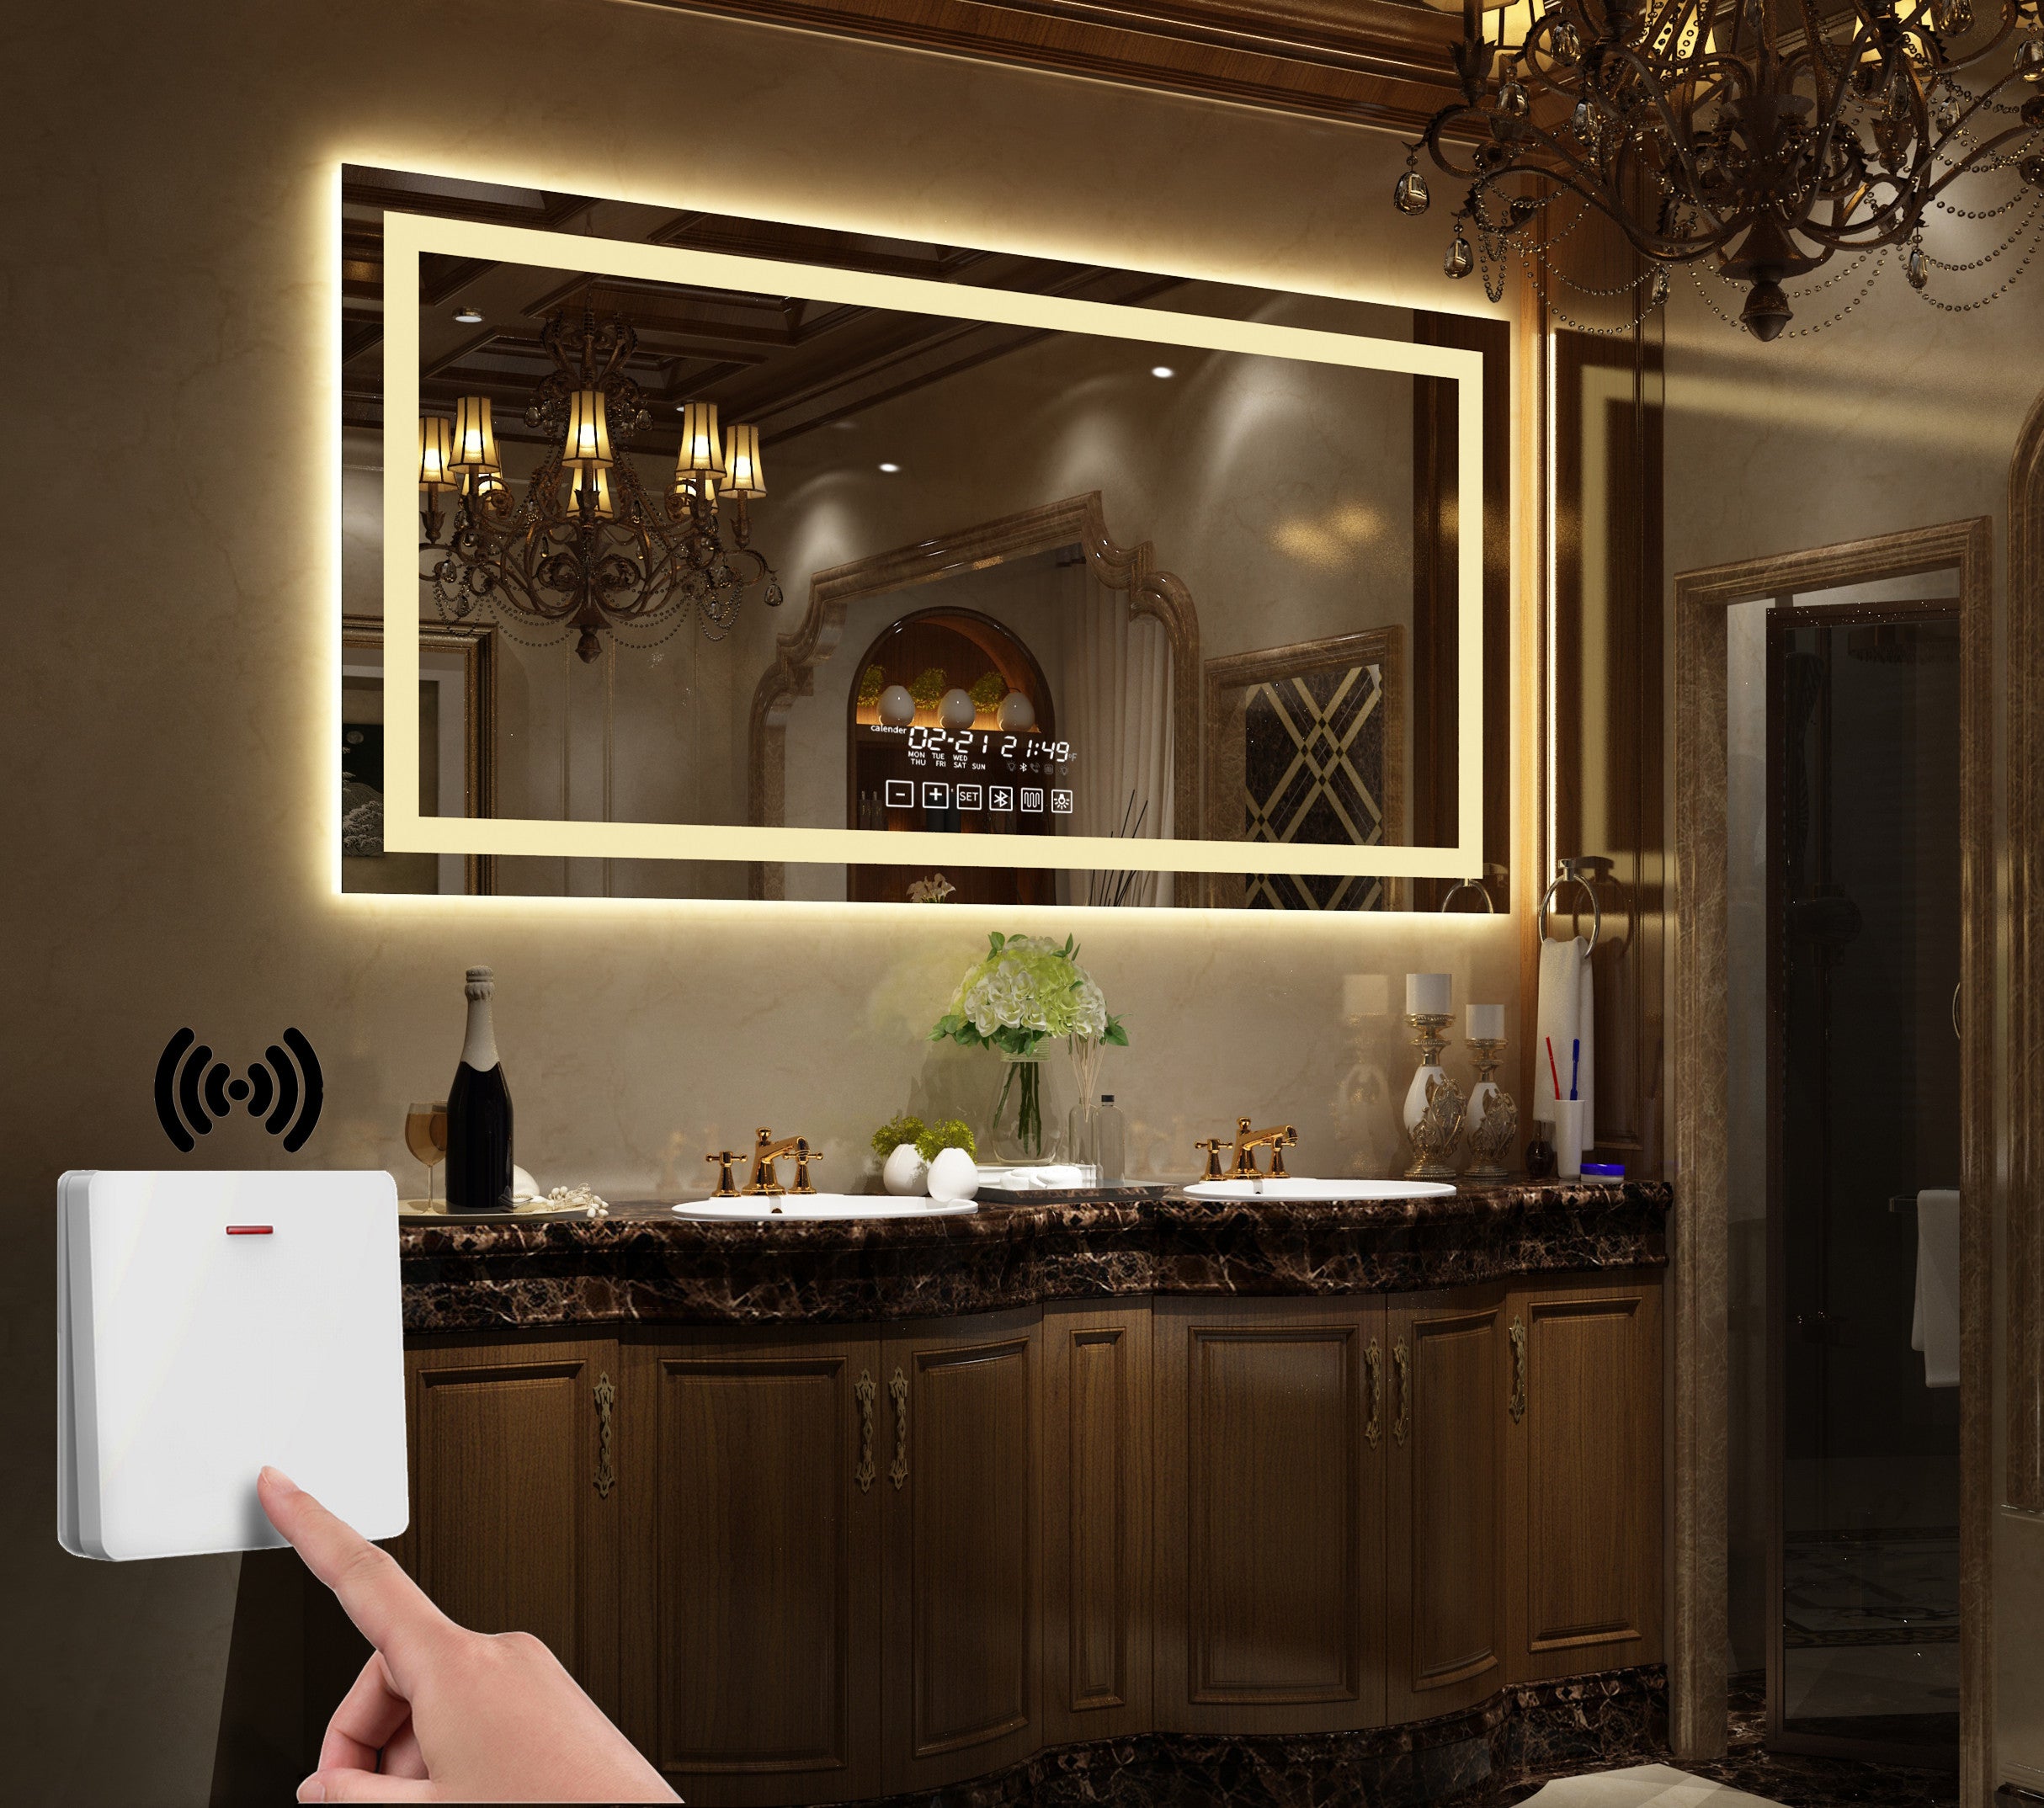 48"×36"Led Smart Bathroom Mirror (Inlaid,Horizontal)